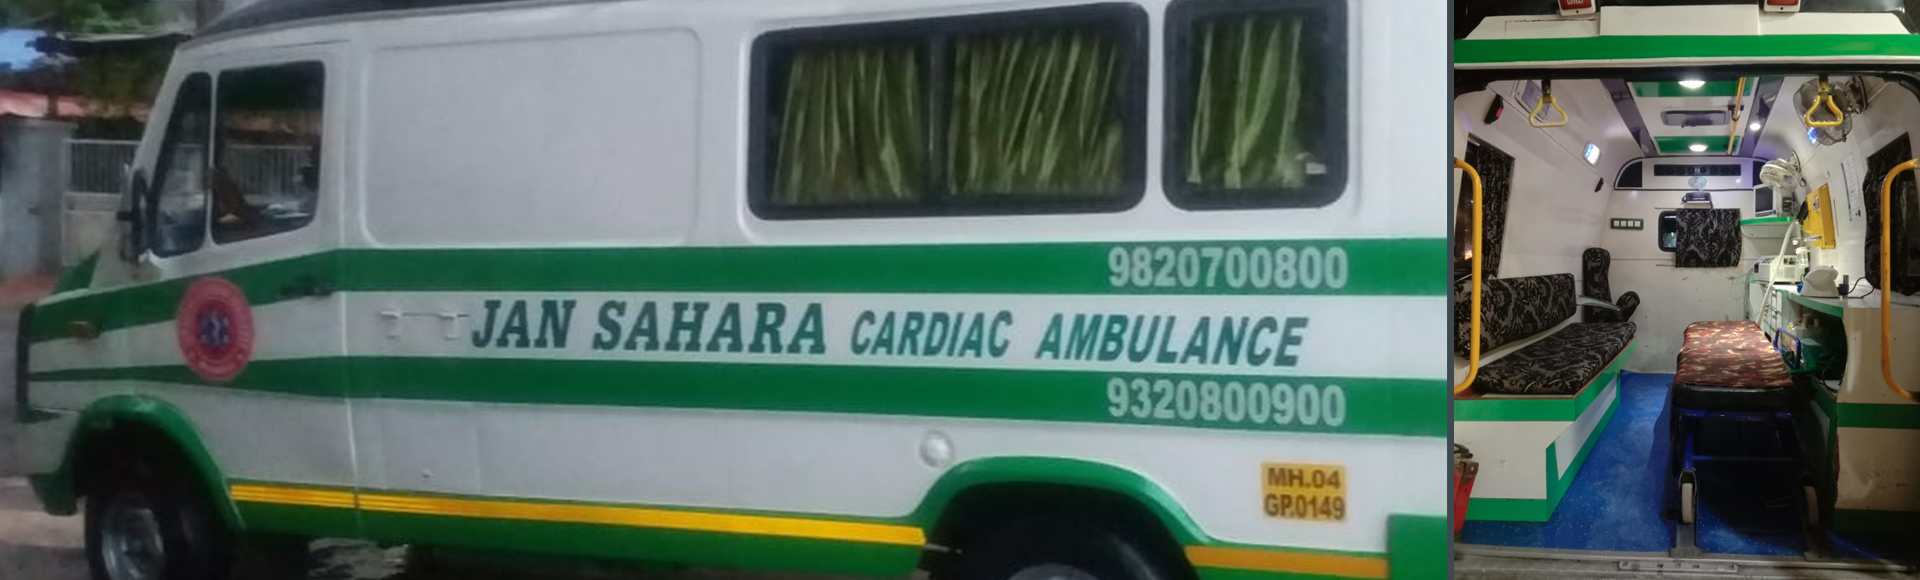 Ambulance service near me